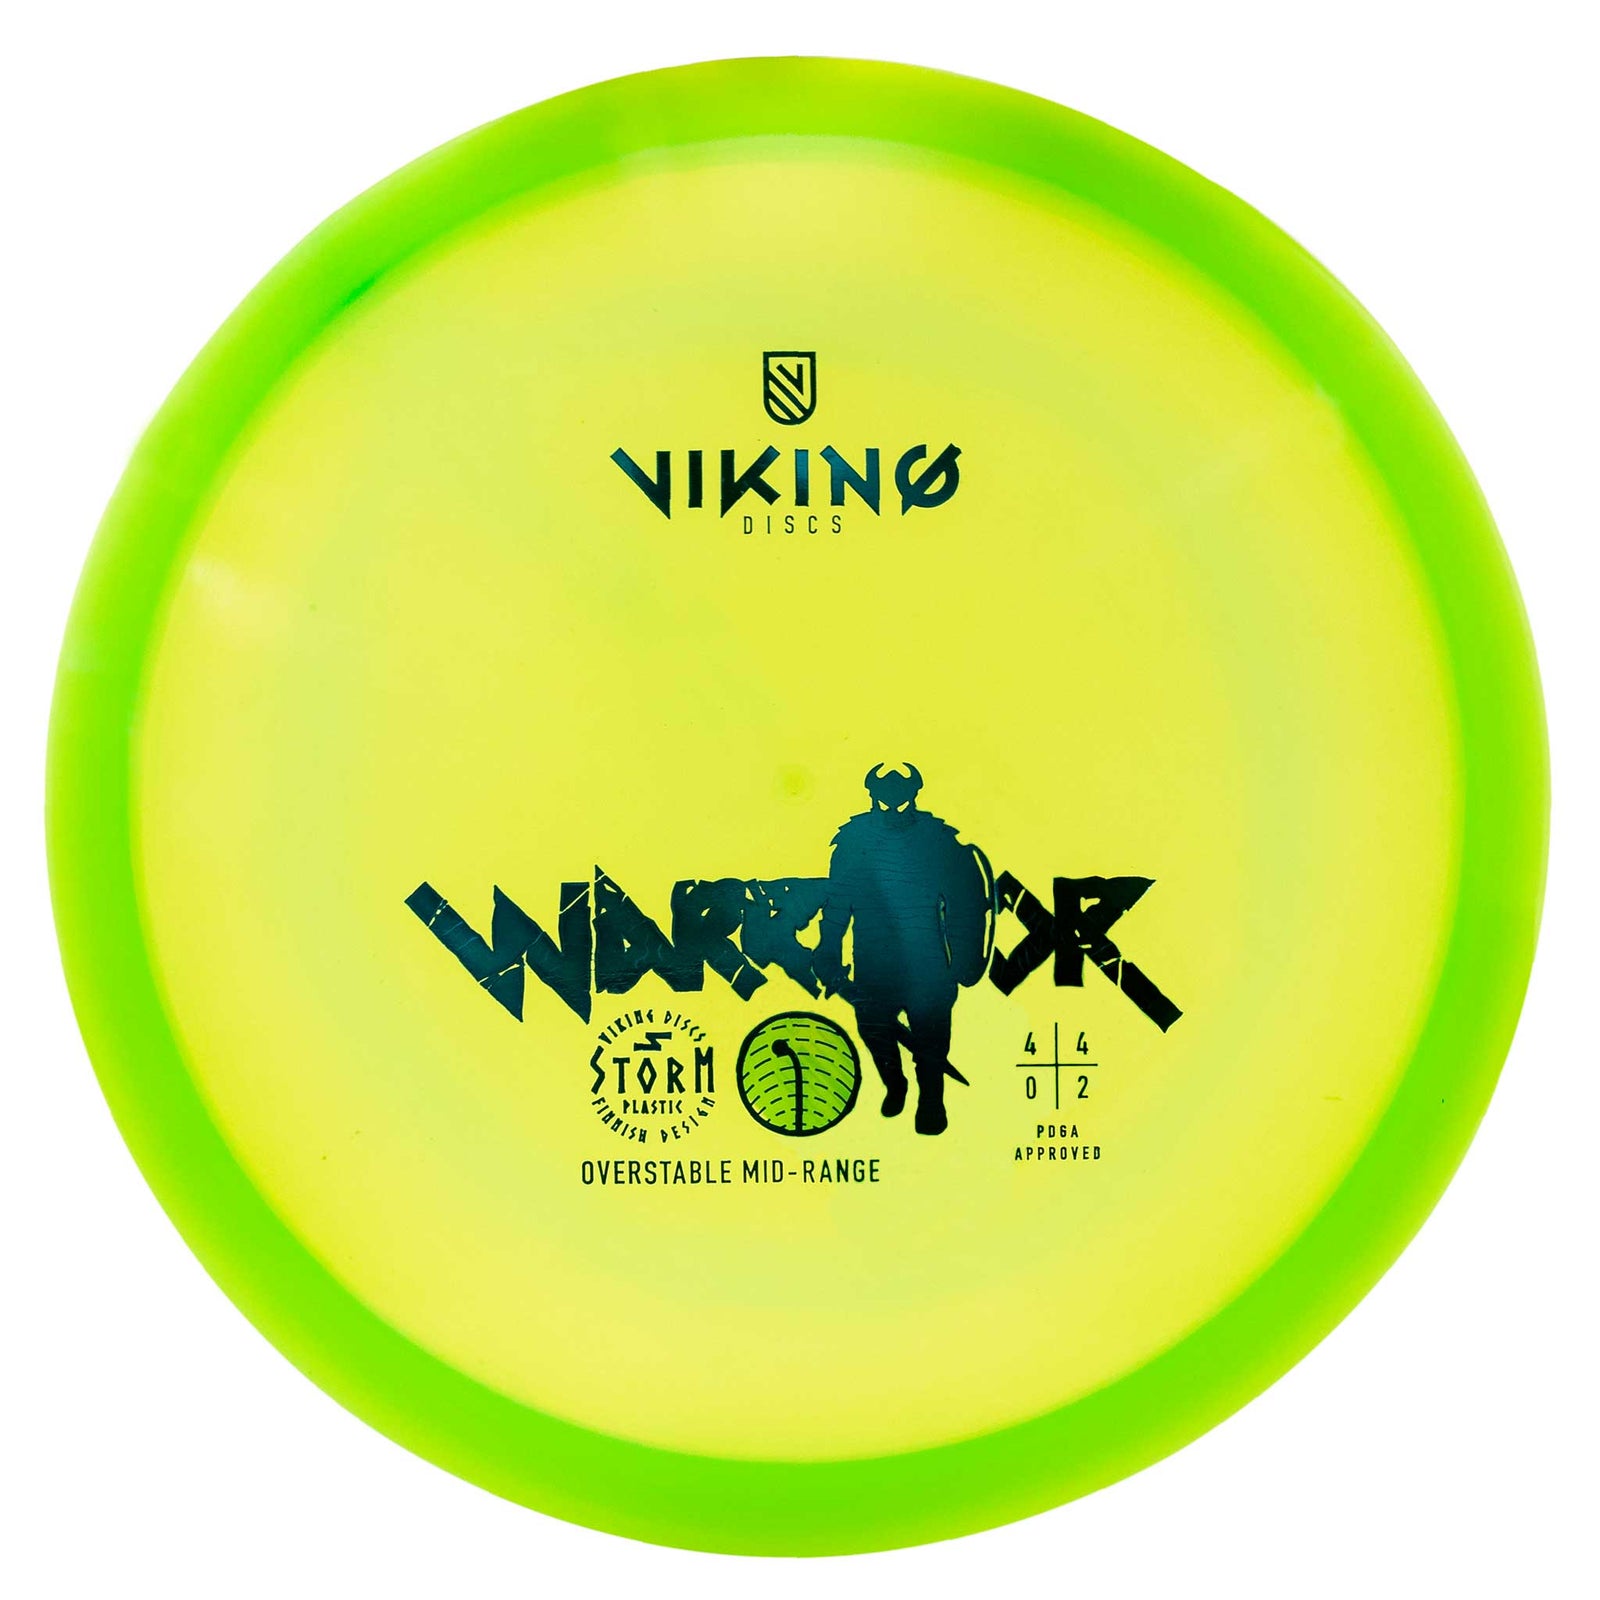 Viking Discs US Store